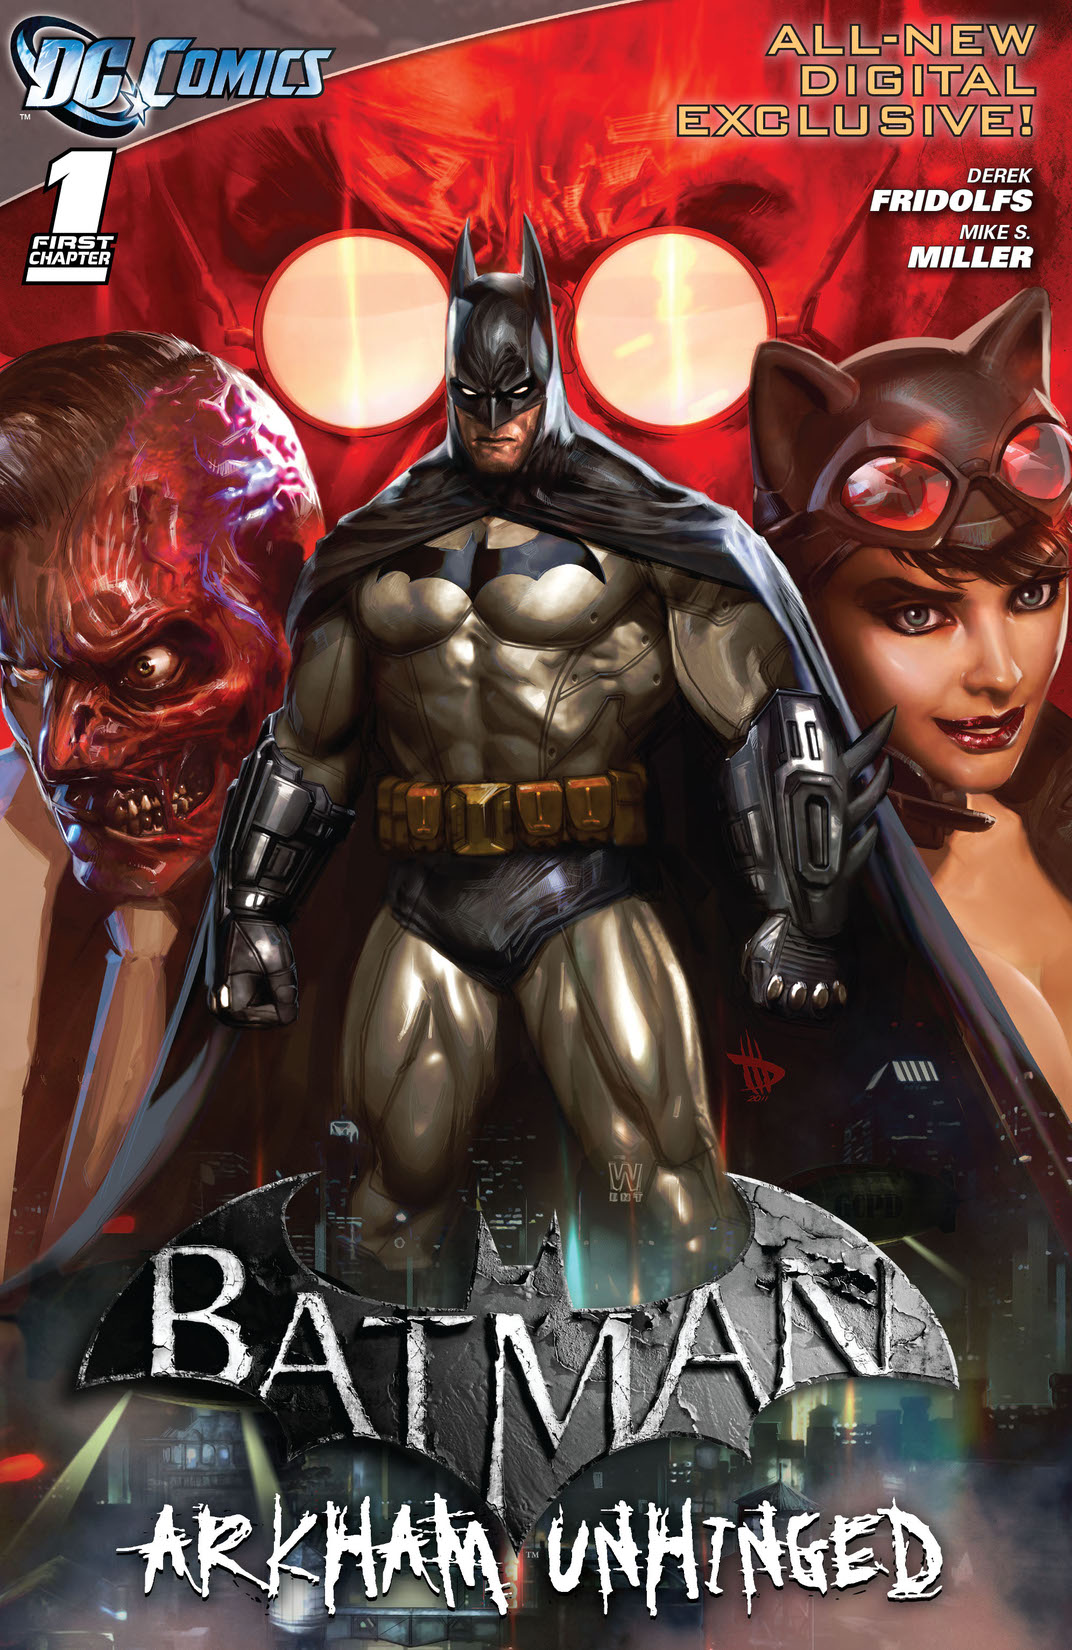 Batman: Arkham Unhinged #1 preview images